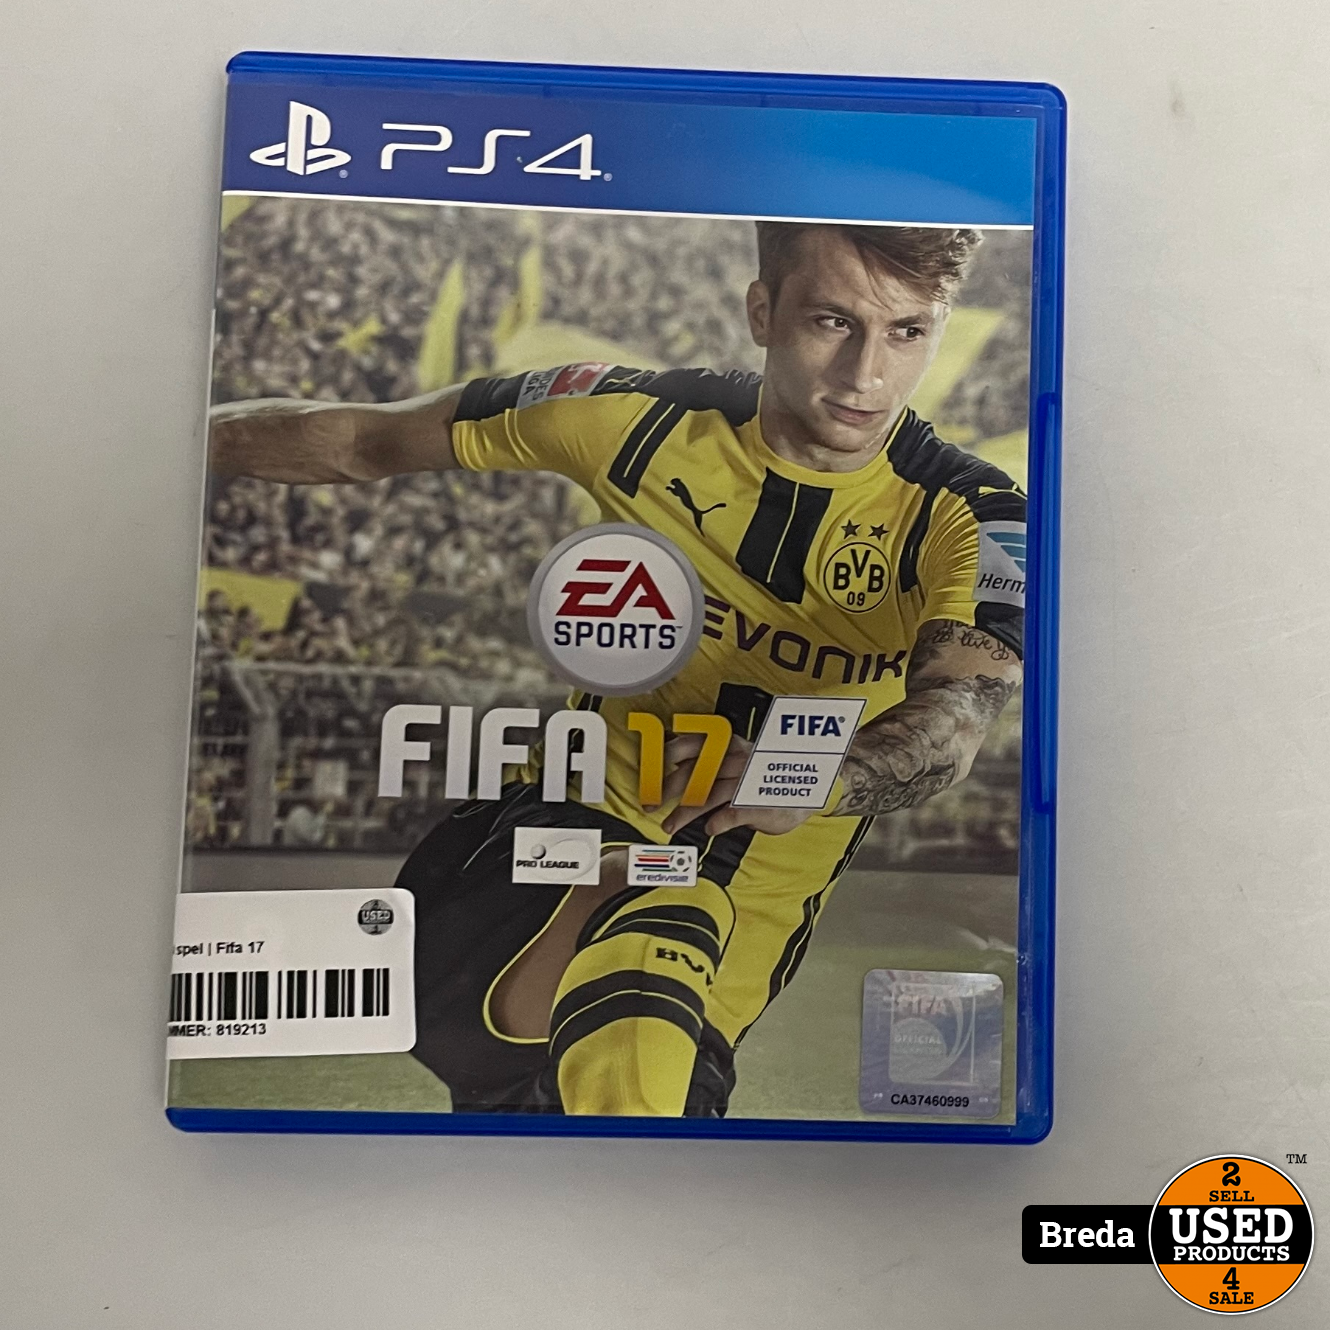 Azijn vooroordeel Rang Playstation 4 spel | Fifa 17 - Used Products Breda